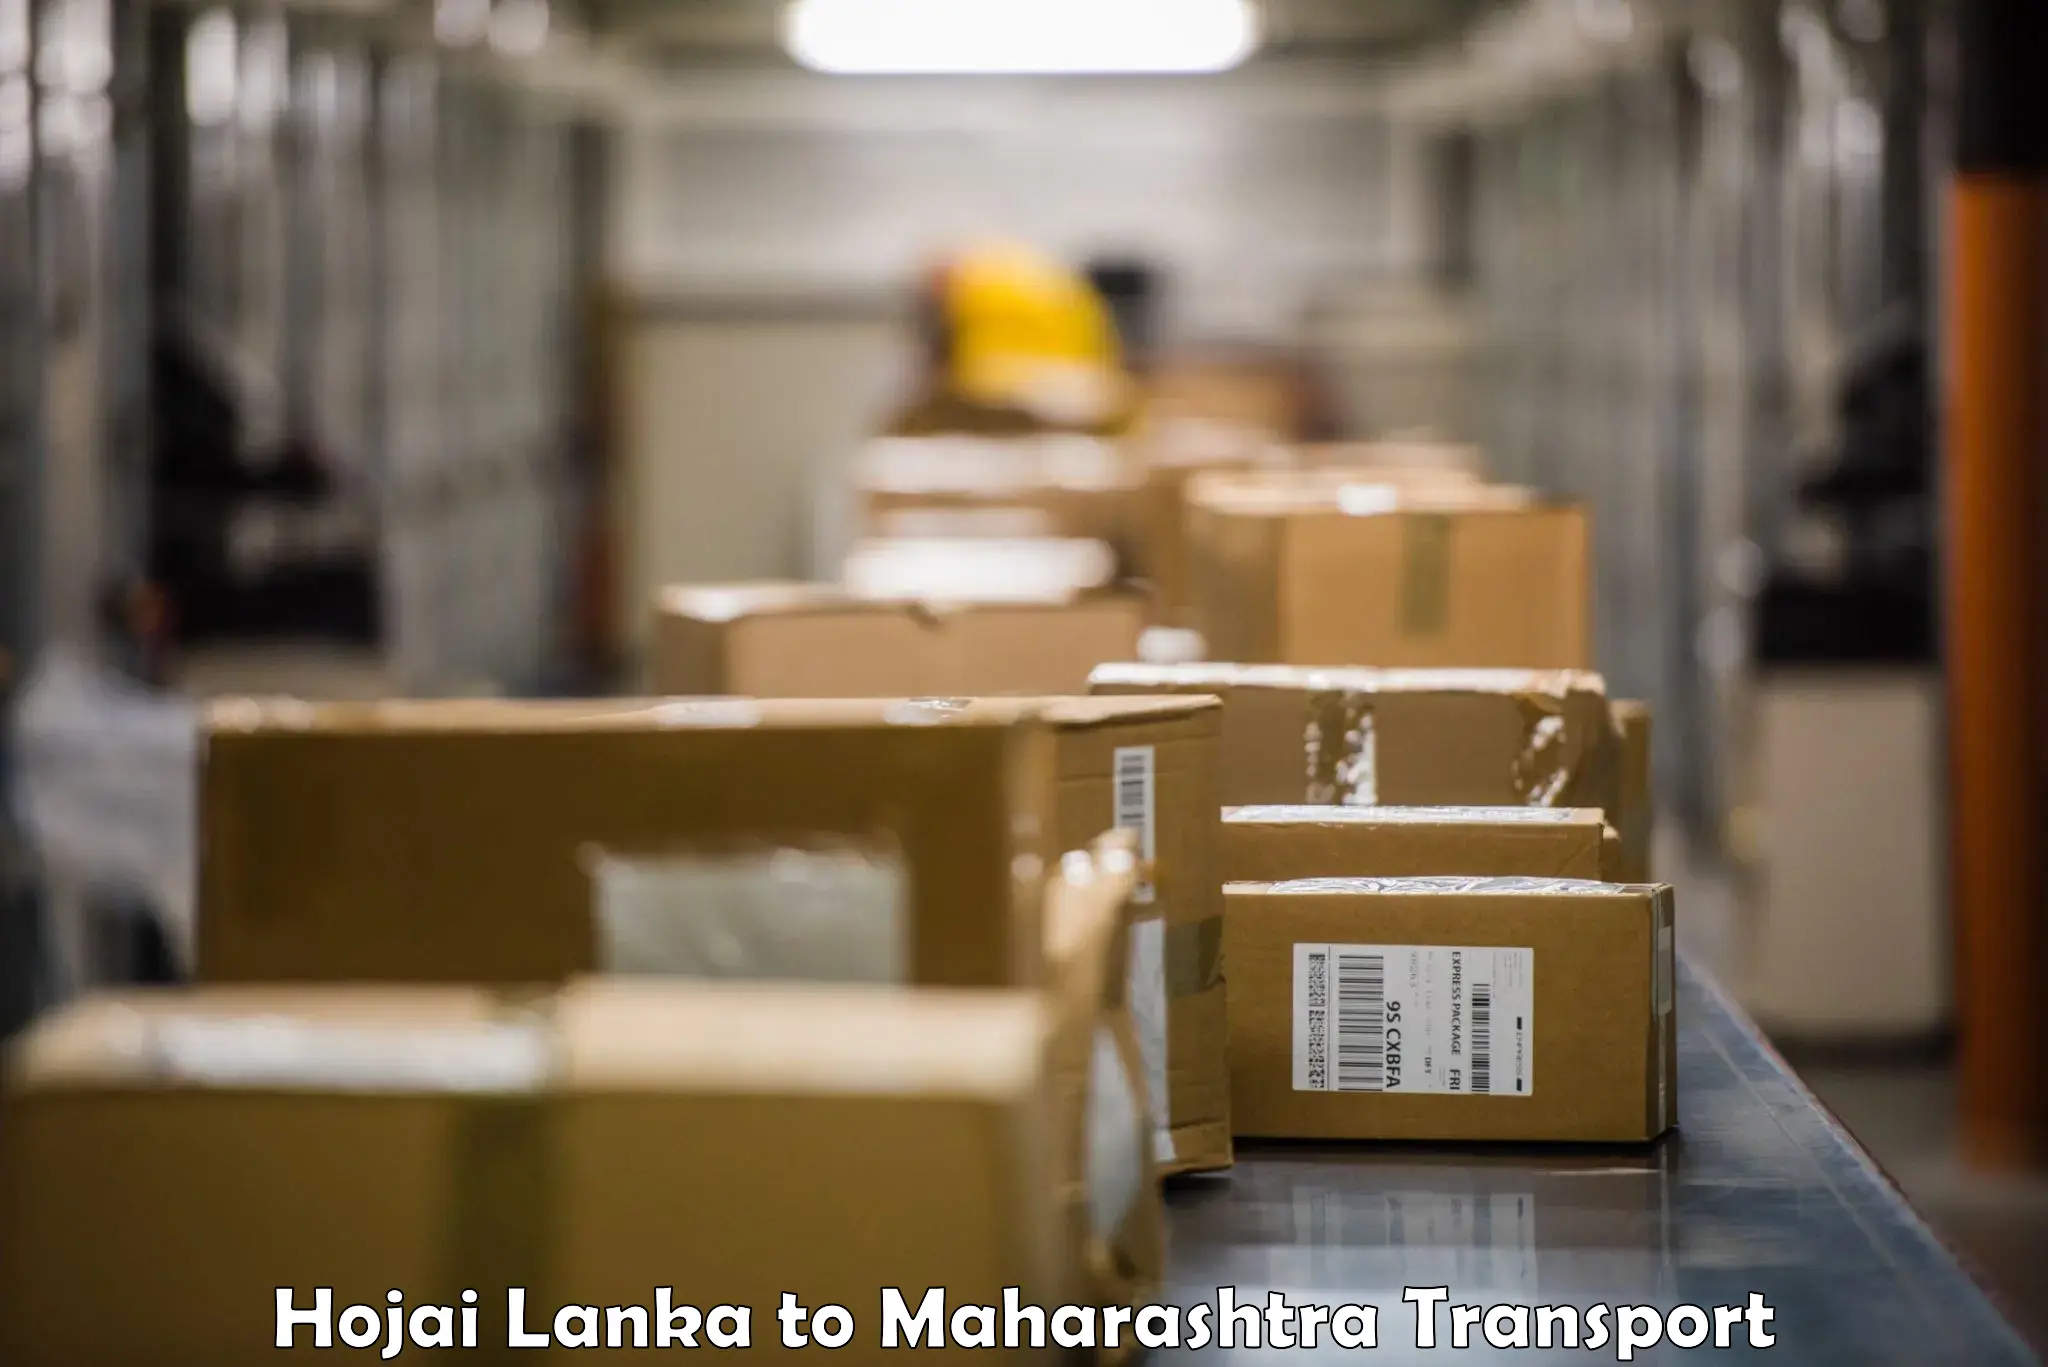 Furniture transport service Hojai Lanka to Nashik